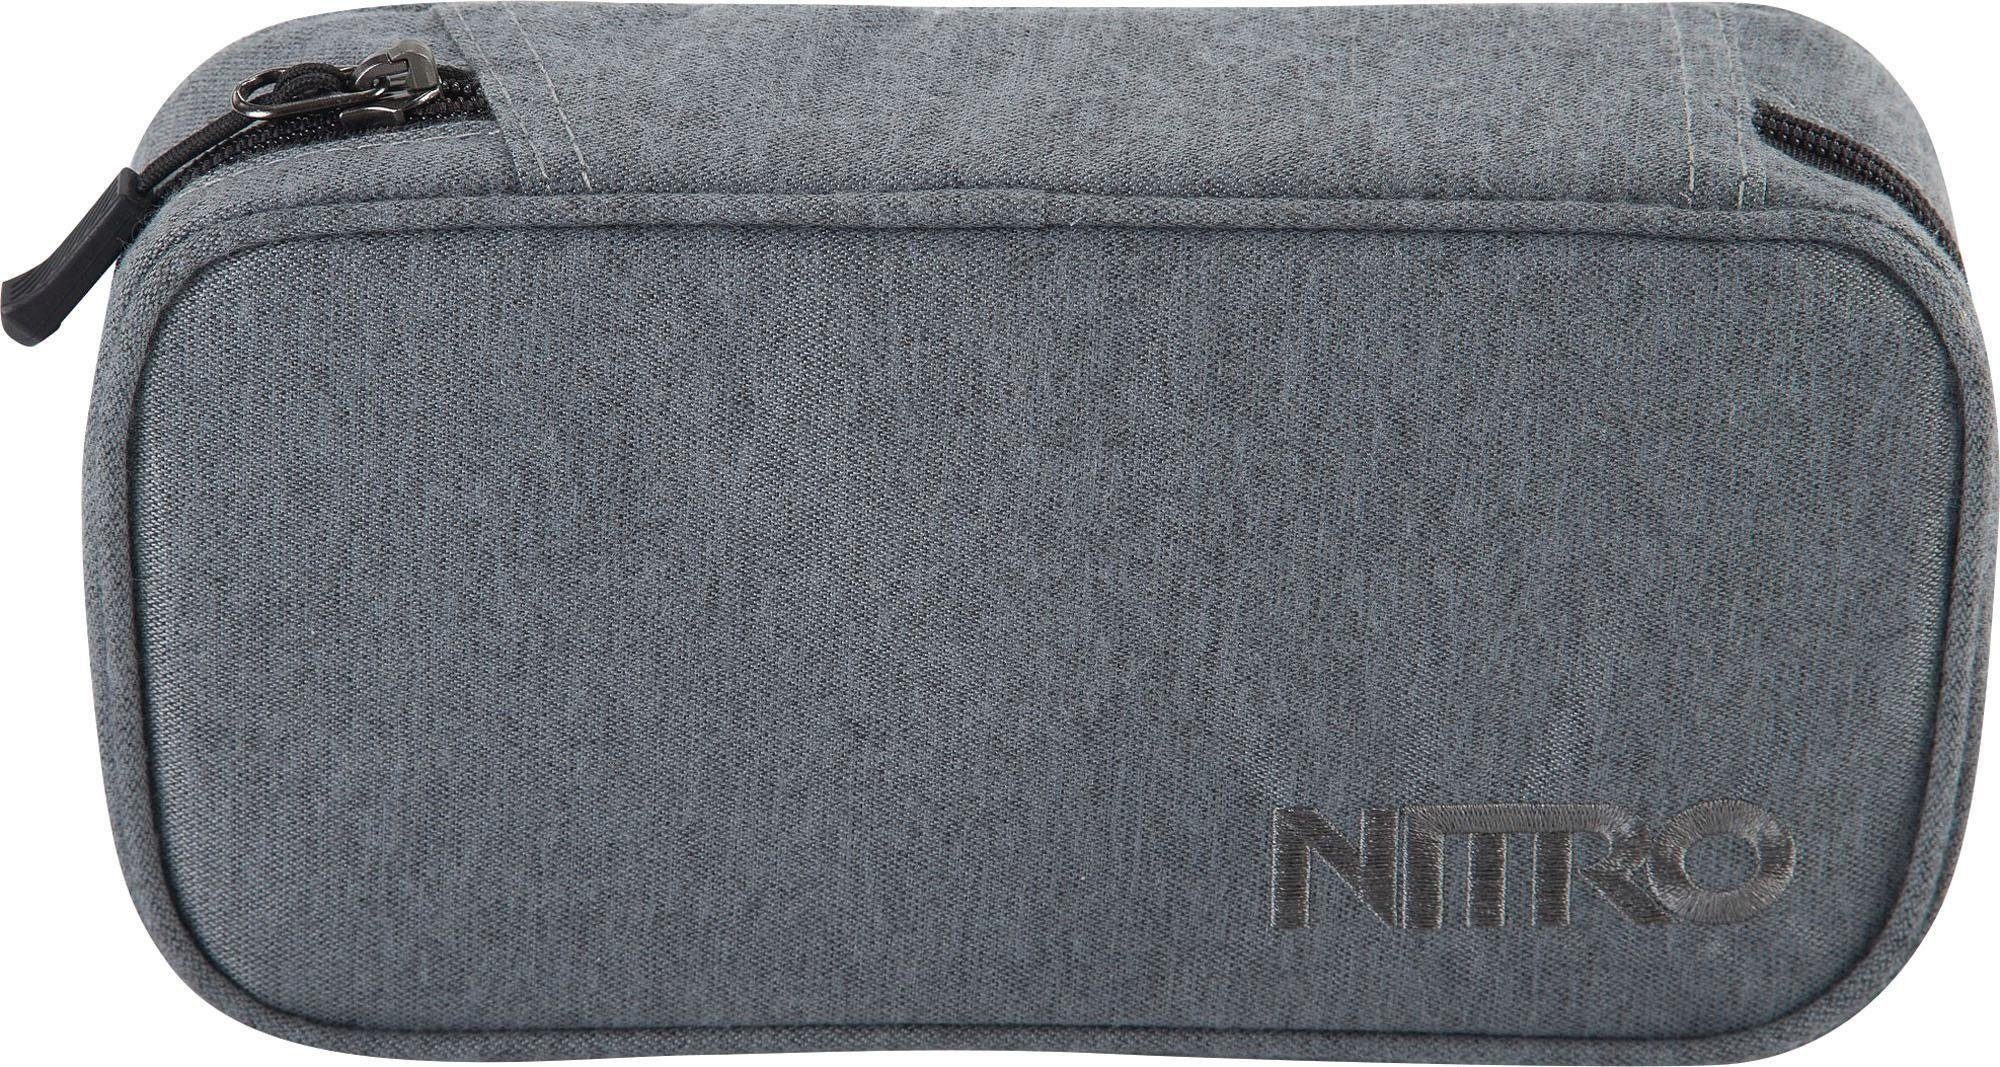 XL, NITRO Federtasche Case Pencil Black Noise